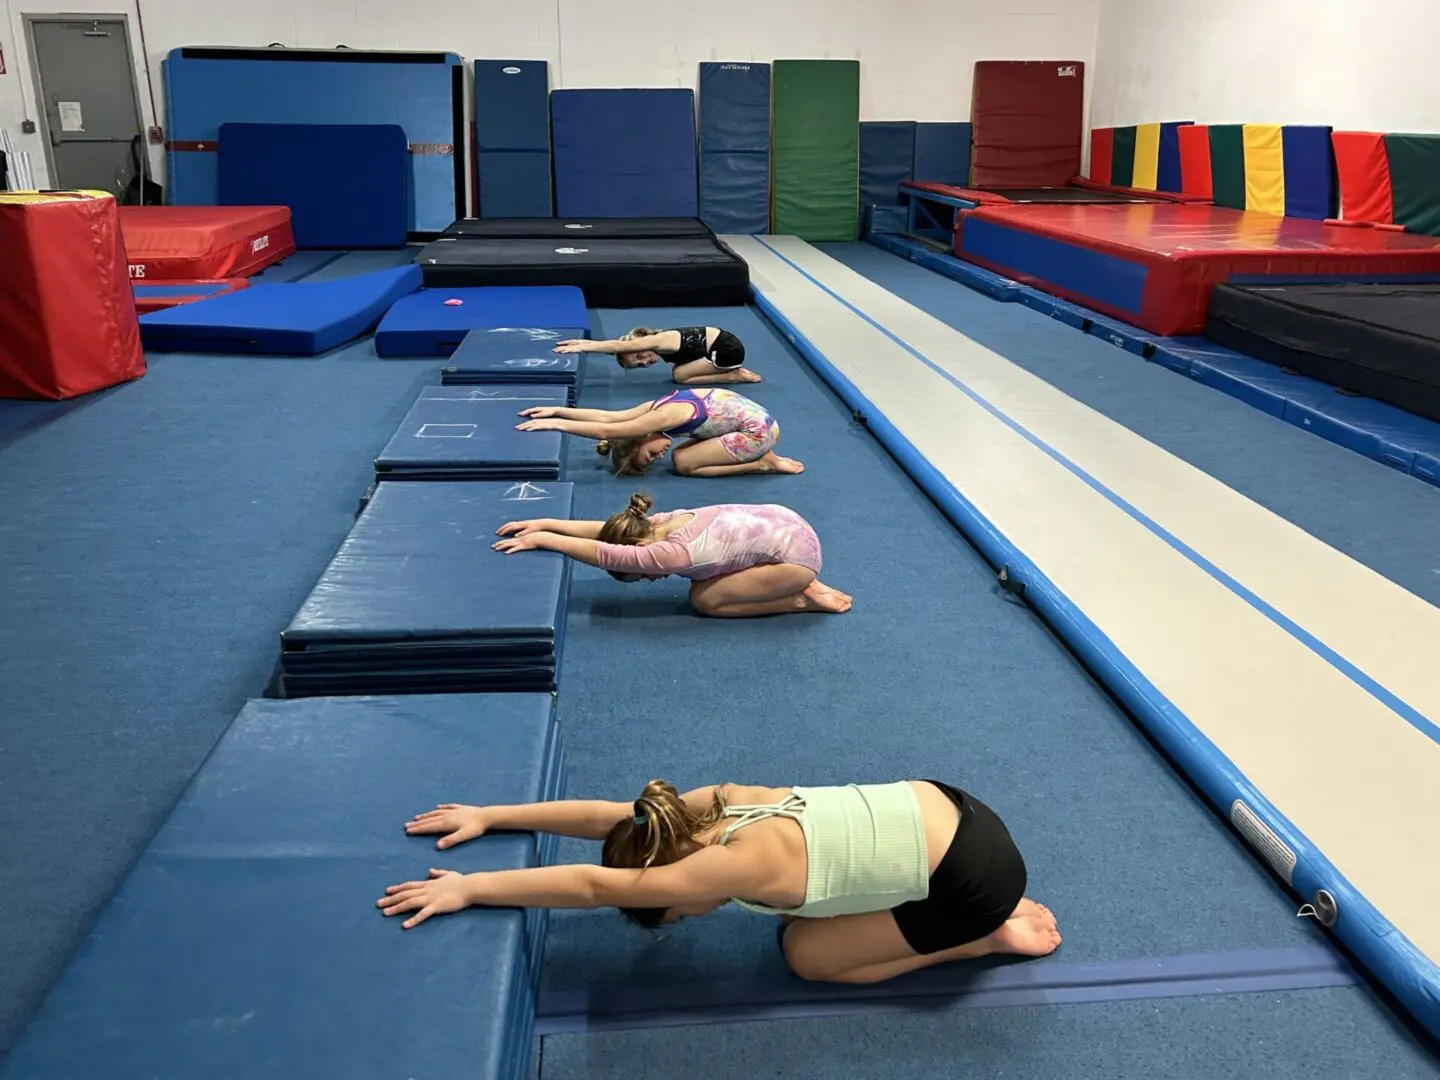 Xplore Tumbling and Gymnastics